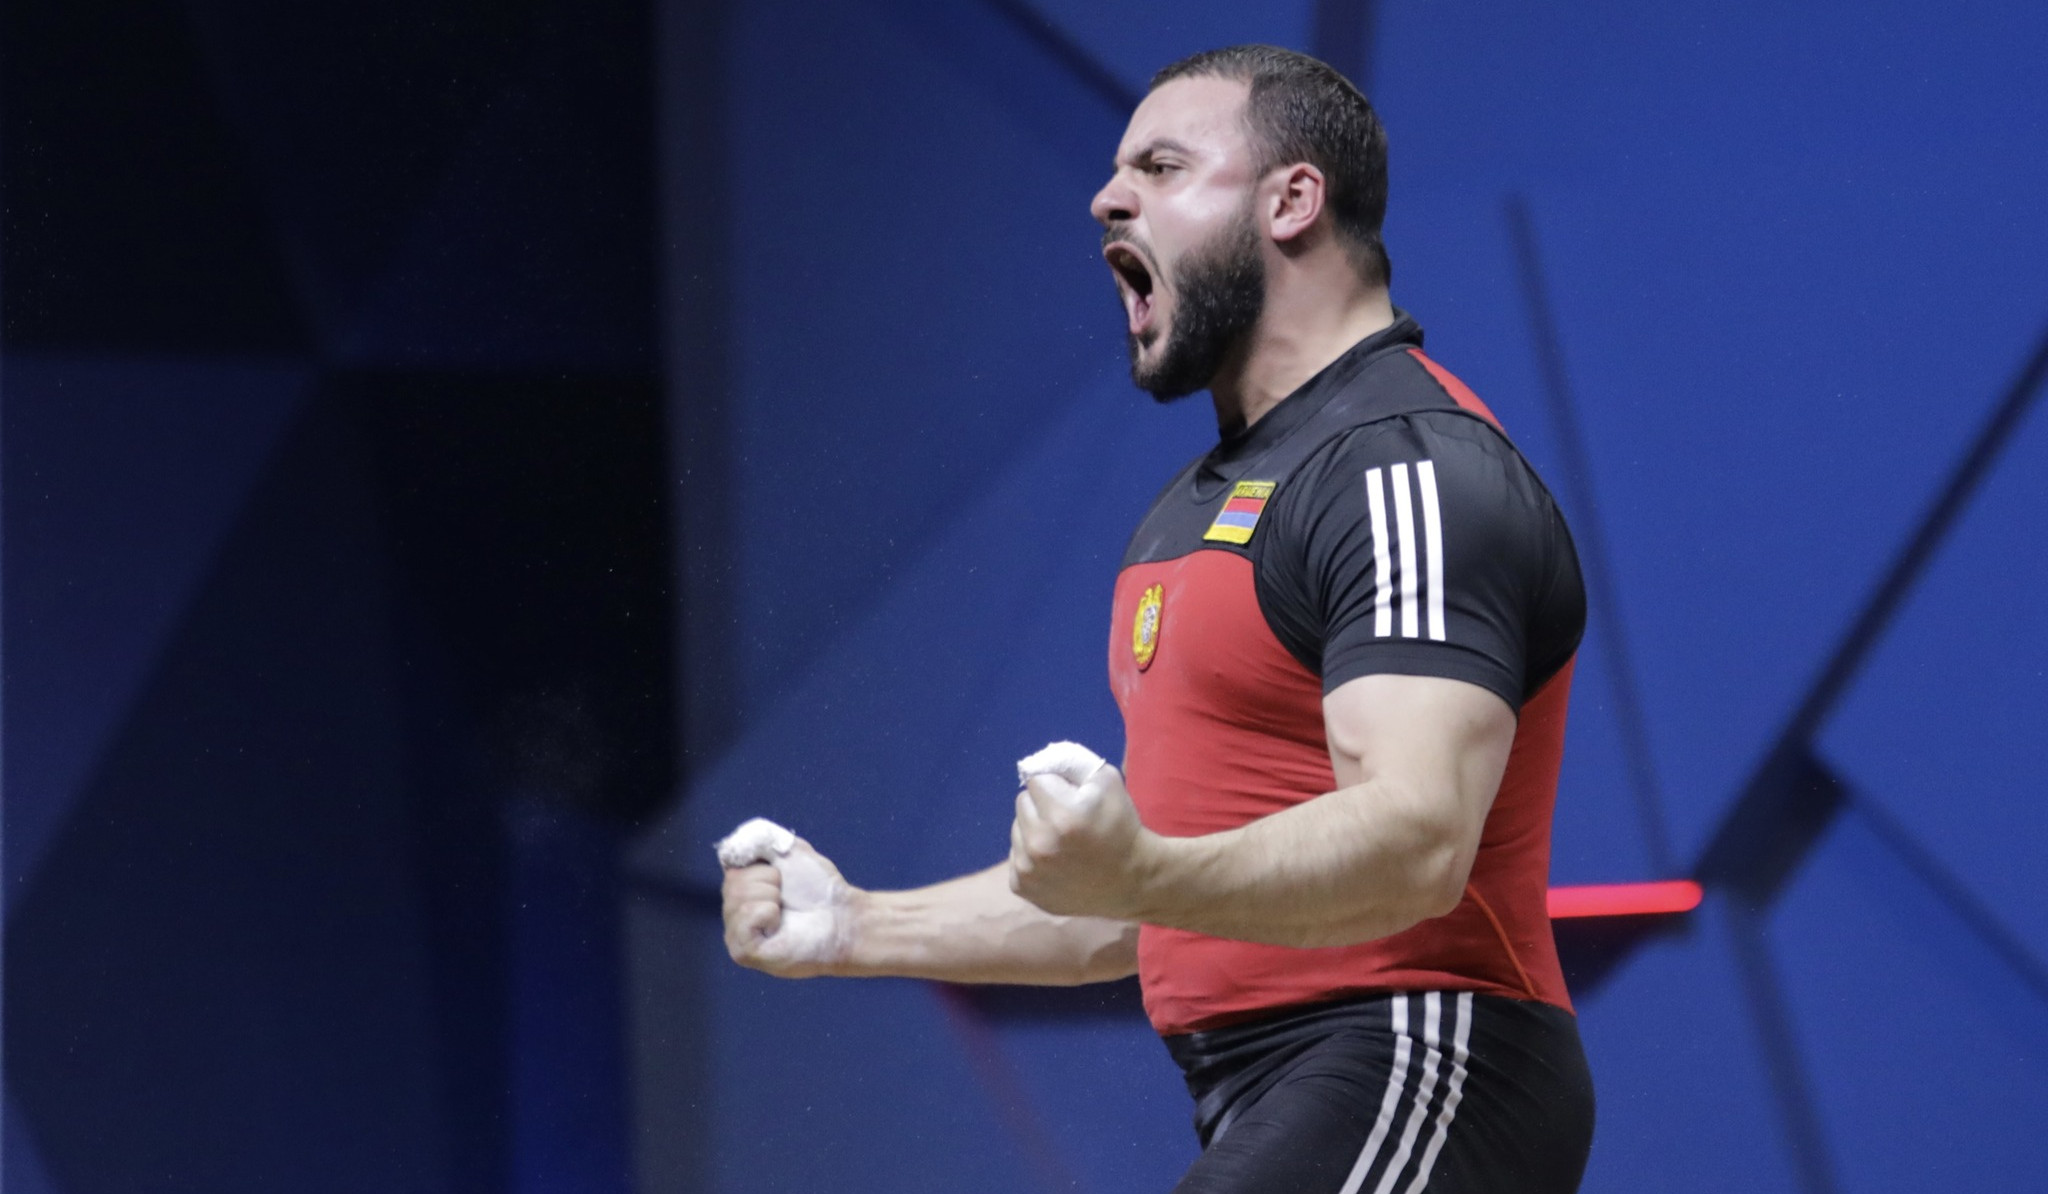 Samvel Gasparyan - European weightlifting champion, Petros Petrosyan - bronze medalist